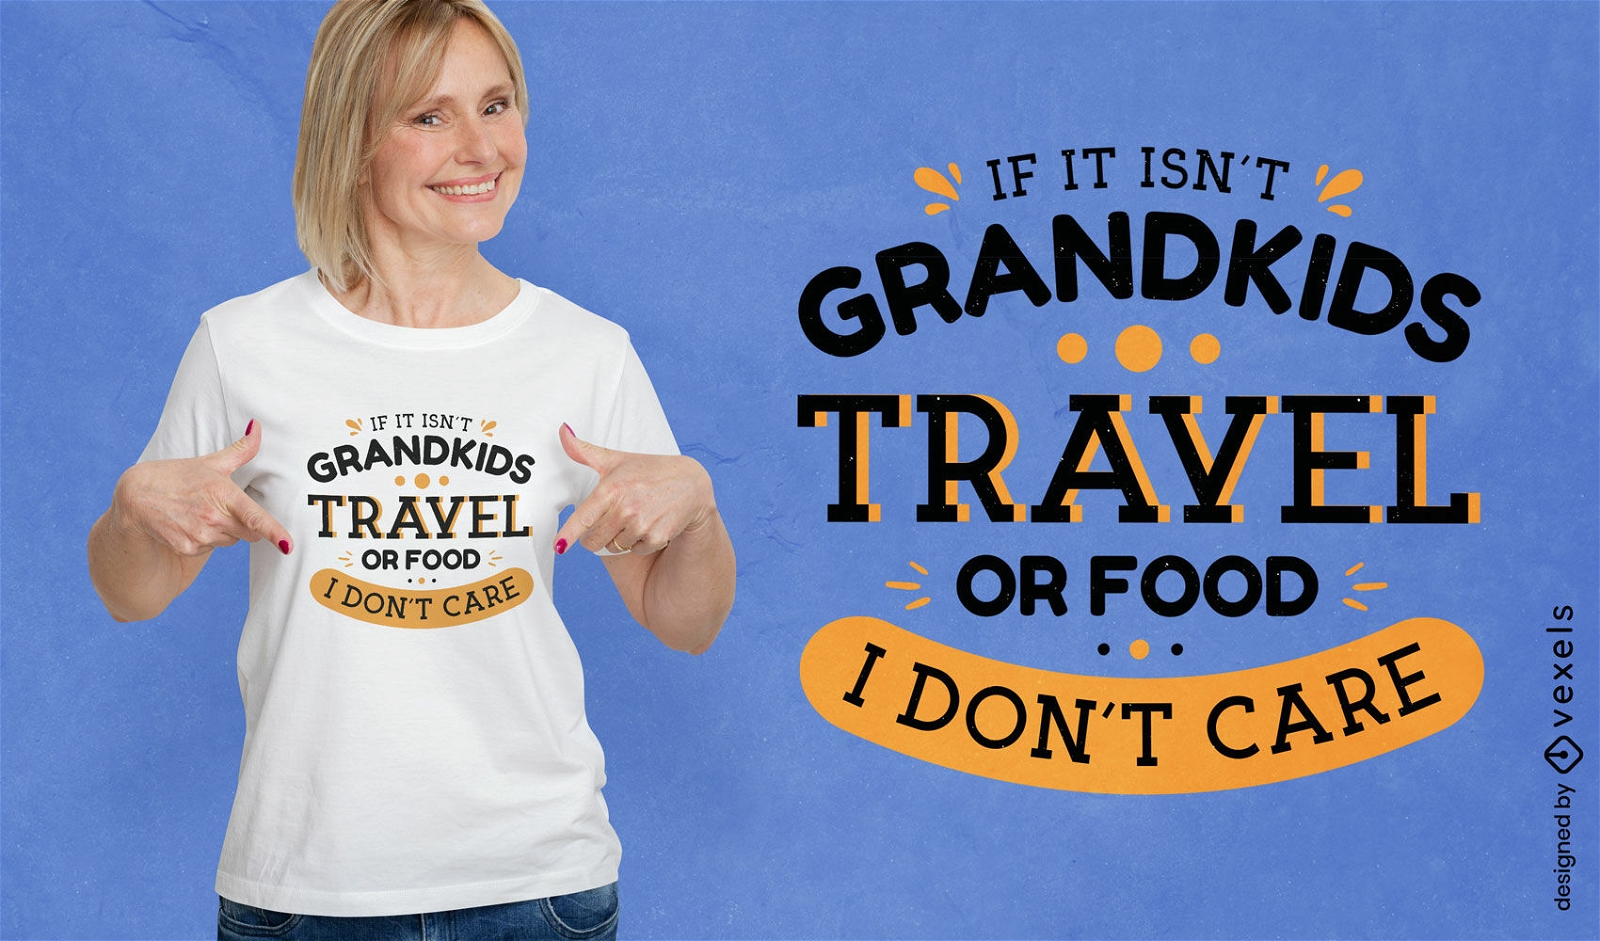 Funny grandma quote t-shirt design